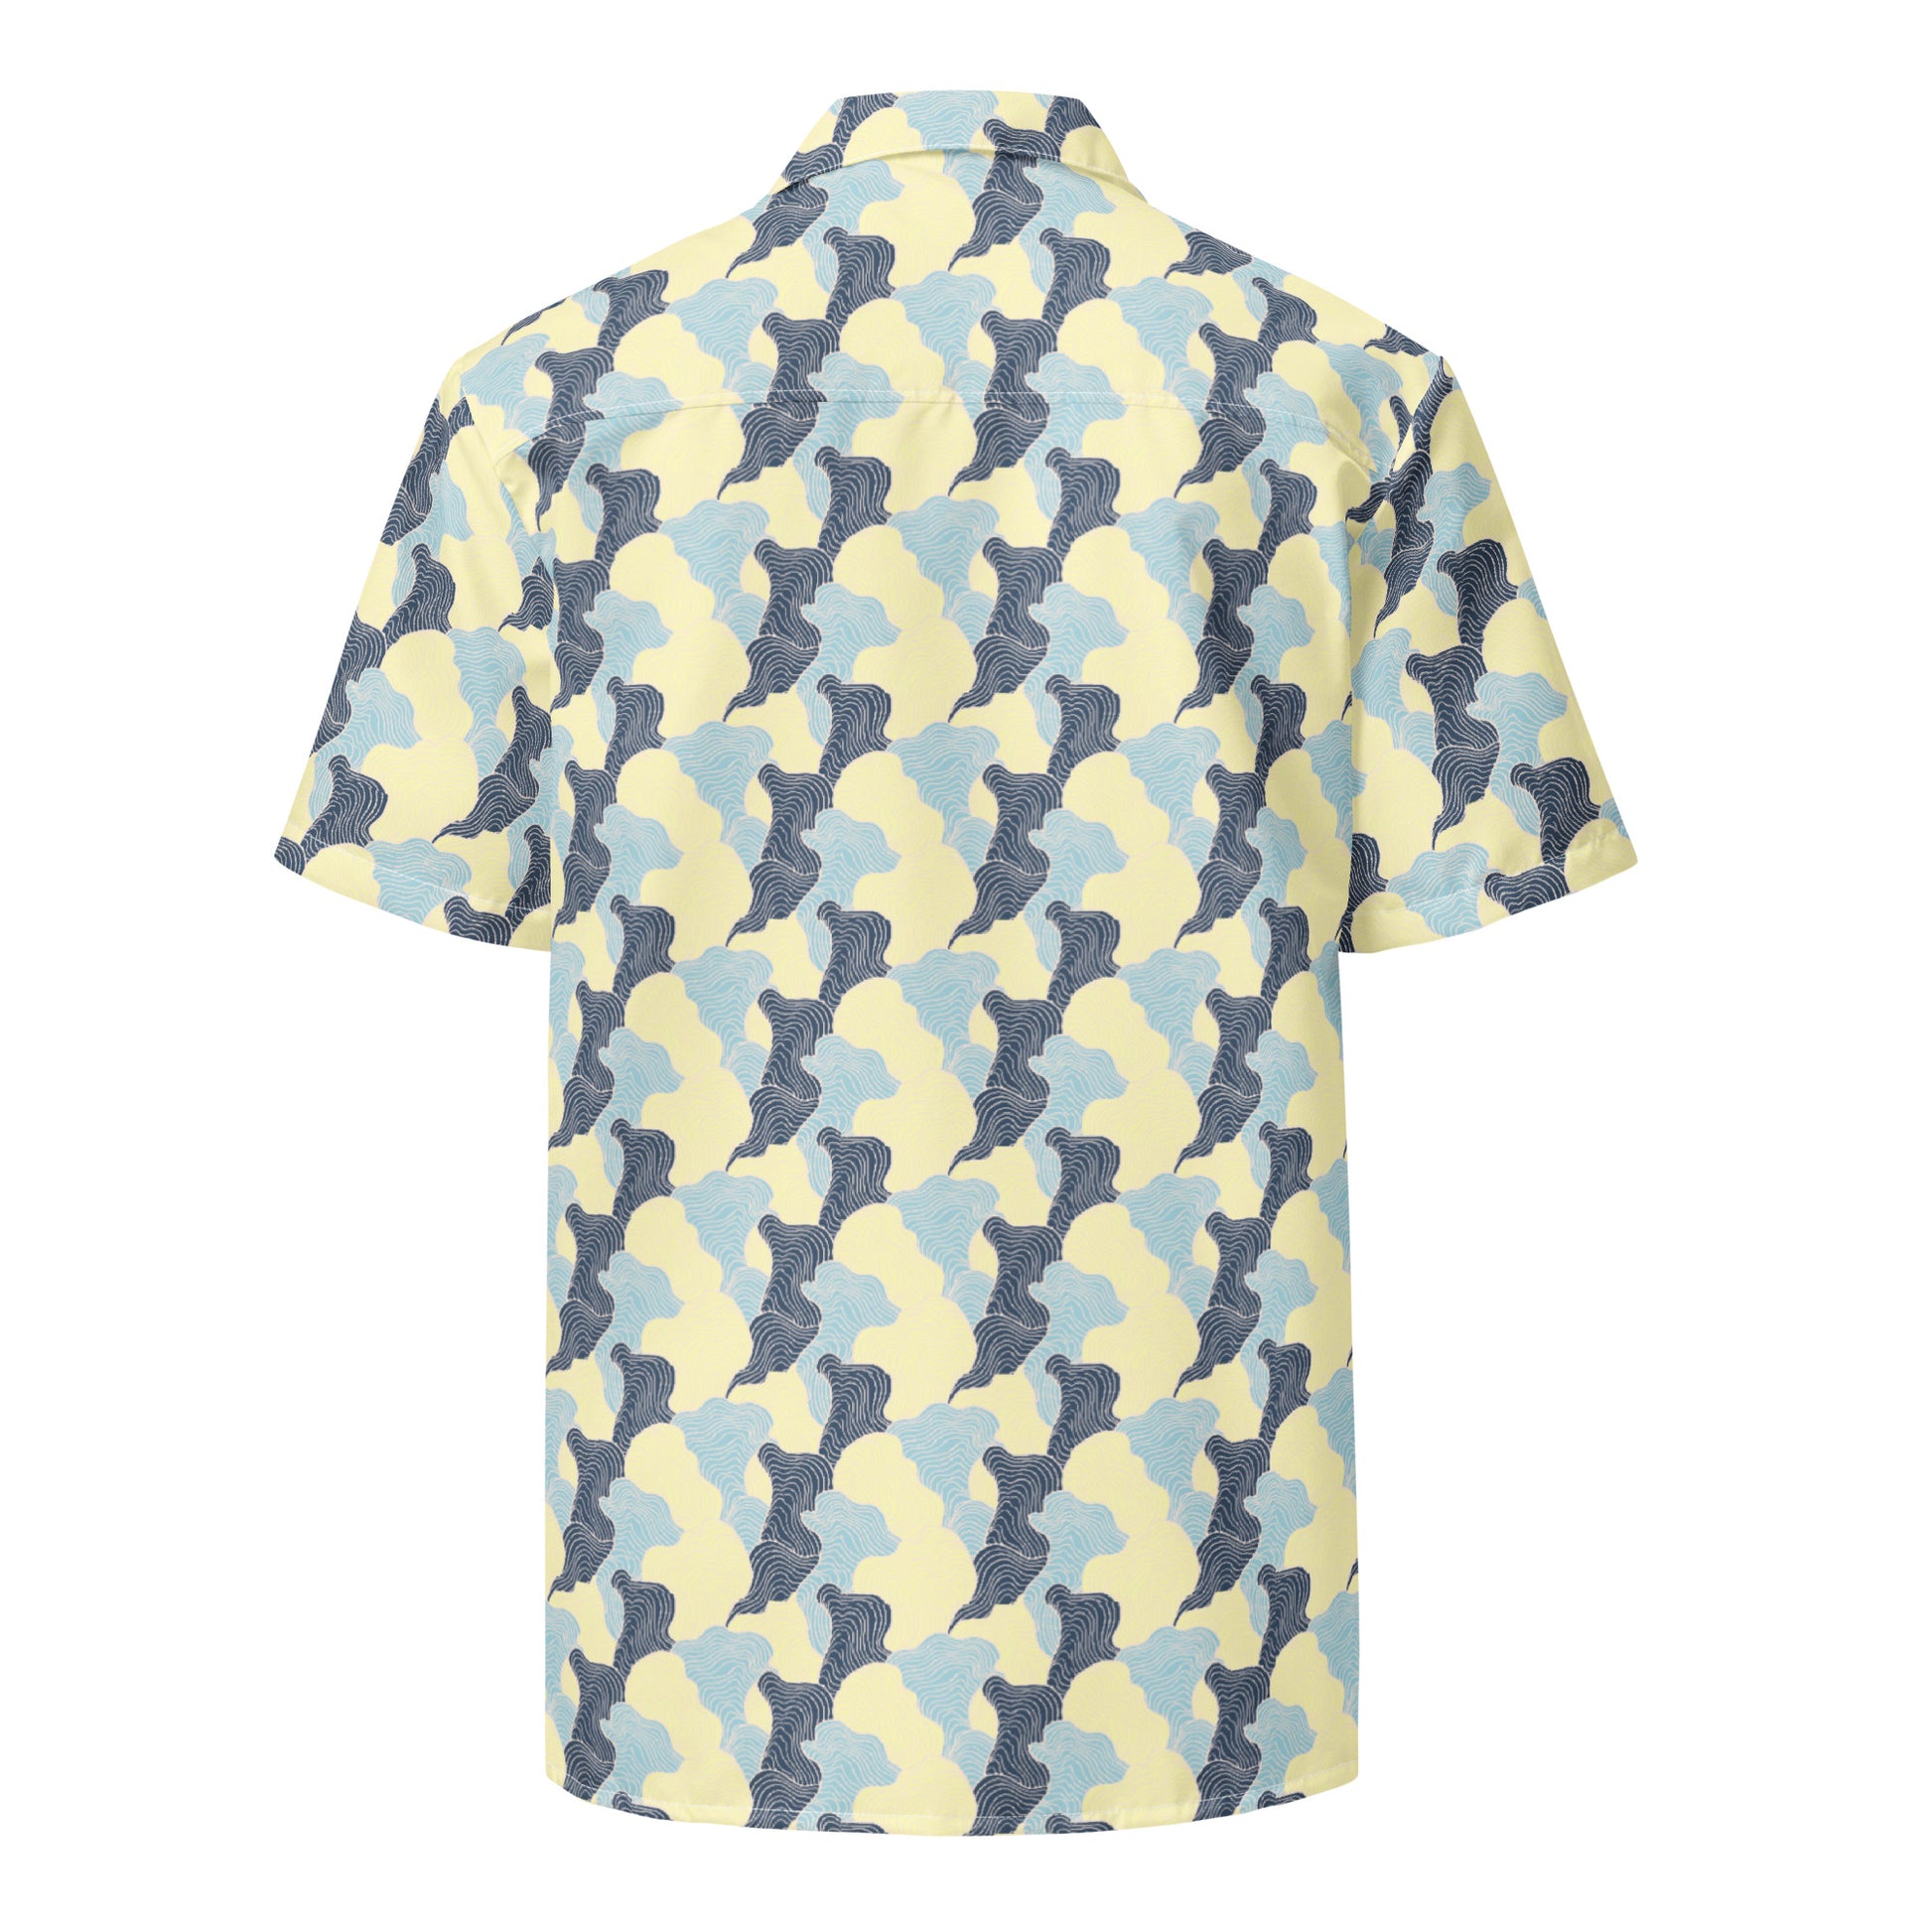 Tropical Swirl button shirt - Tropical Seas Clothing 